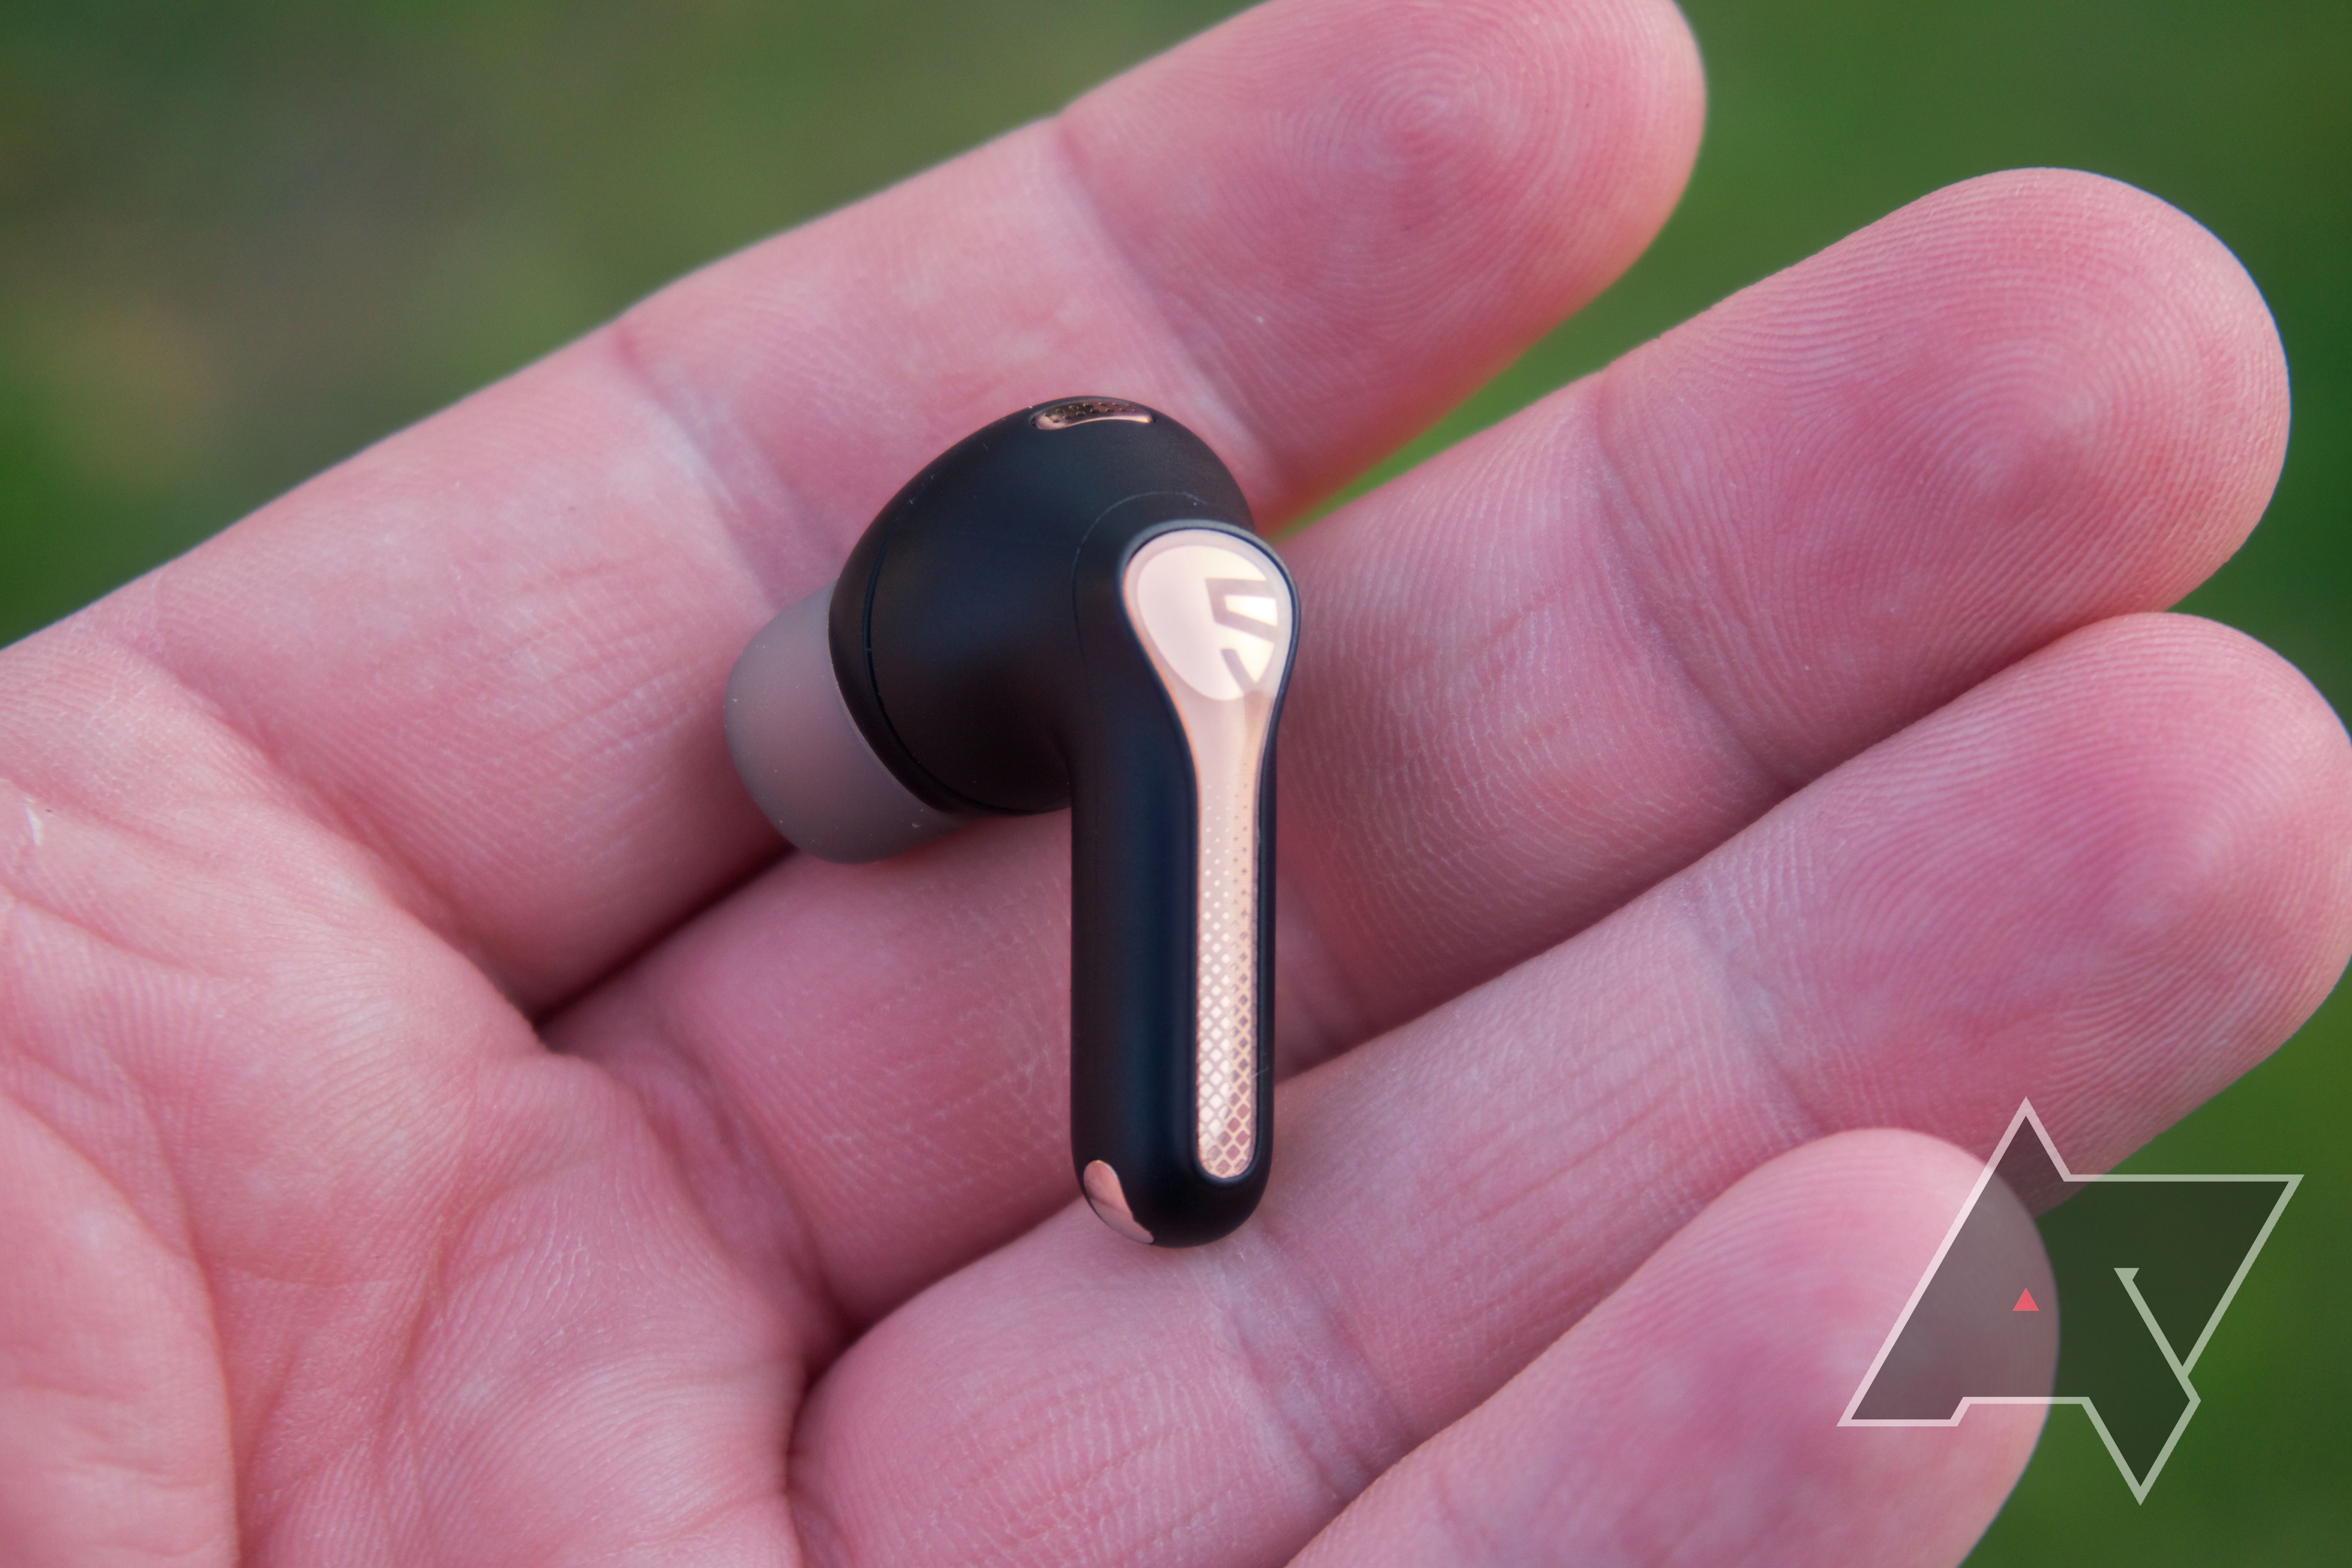 SoundPeats Capsule3 Pro earbuds review: Premium sound, not-so-premium price